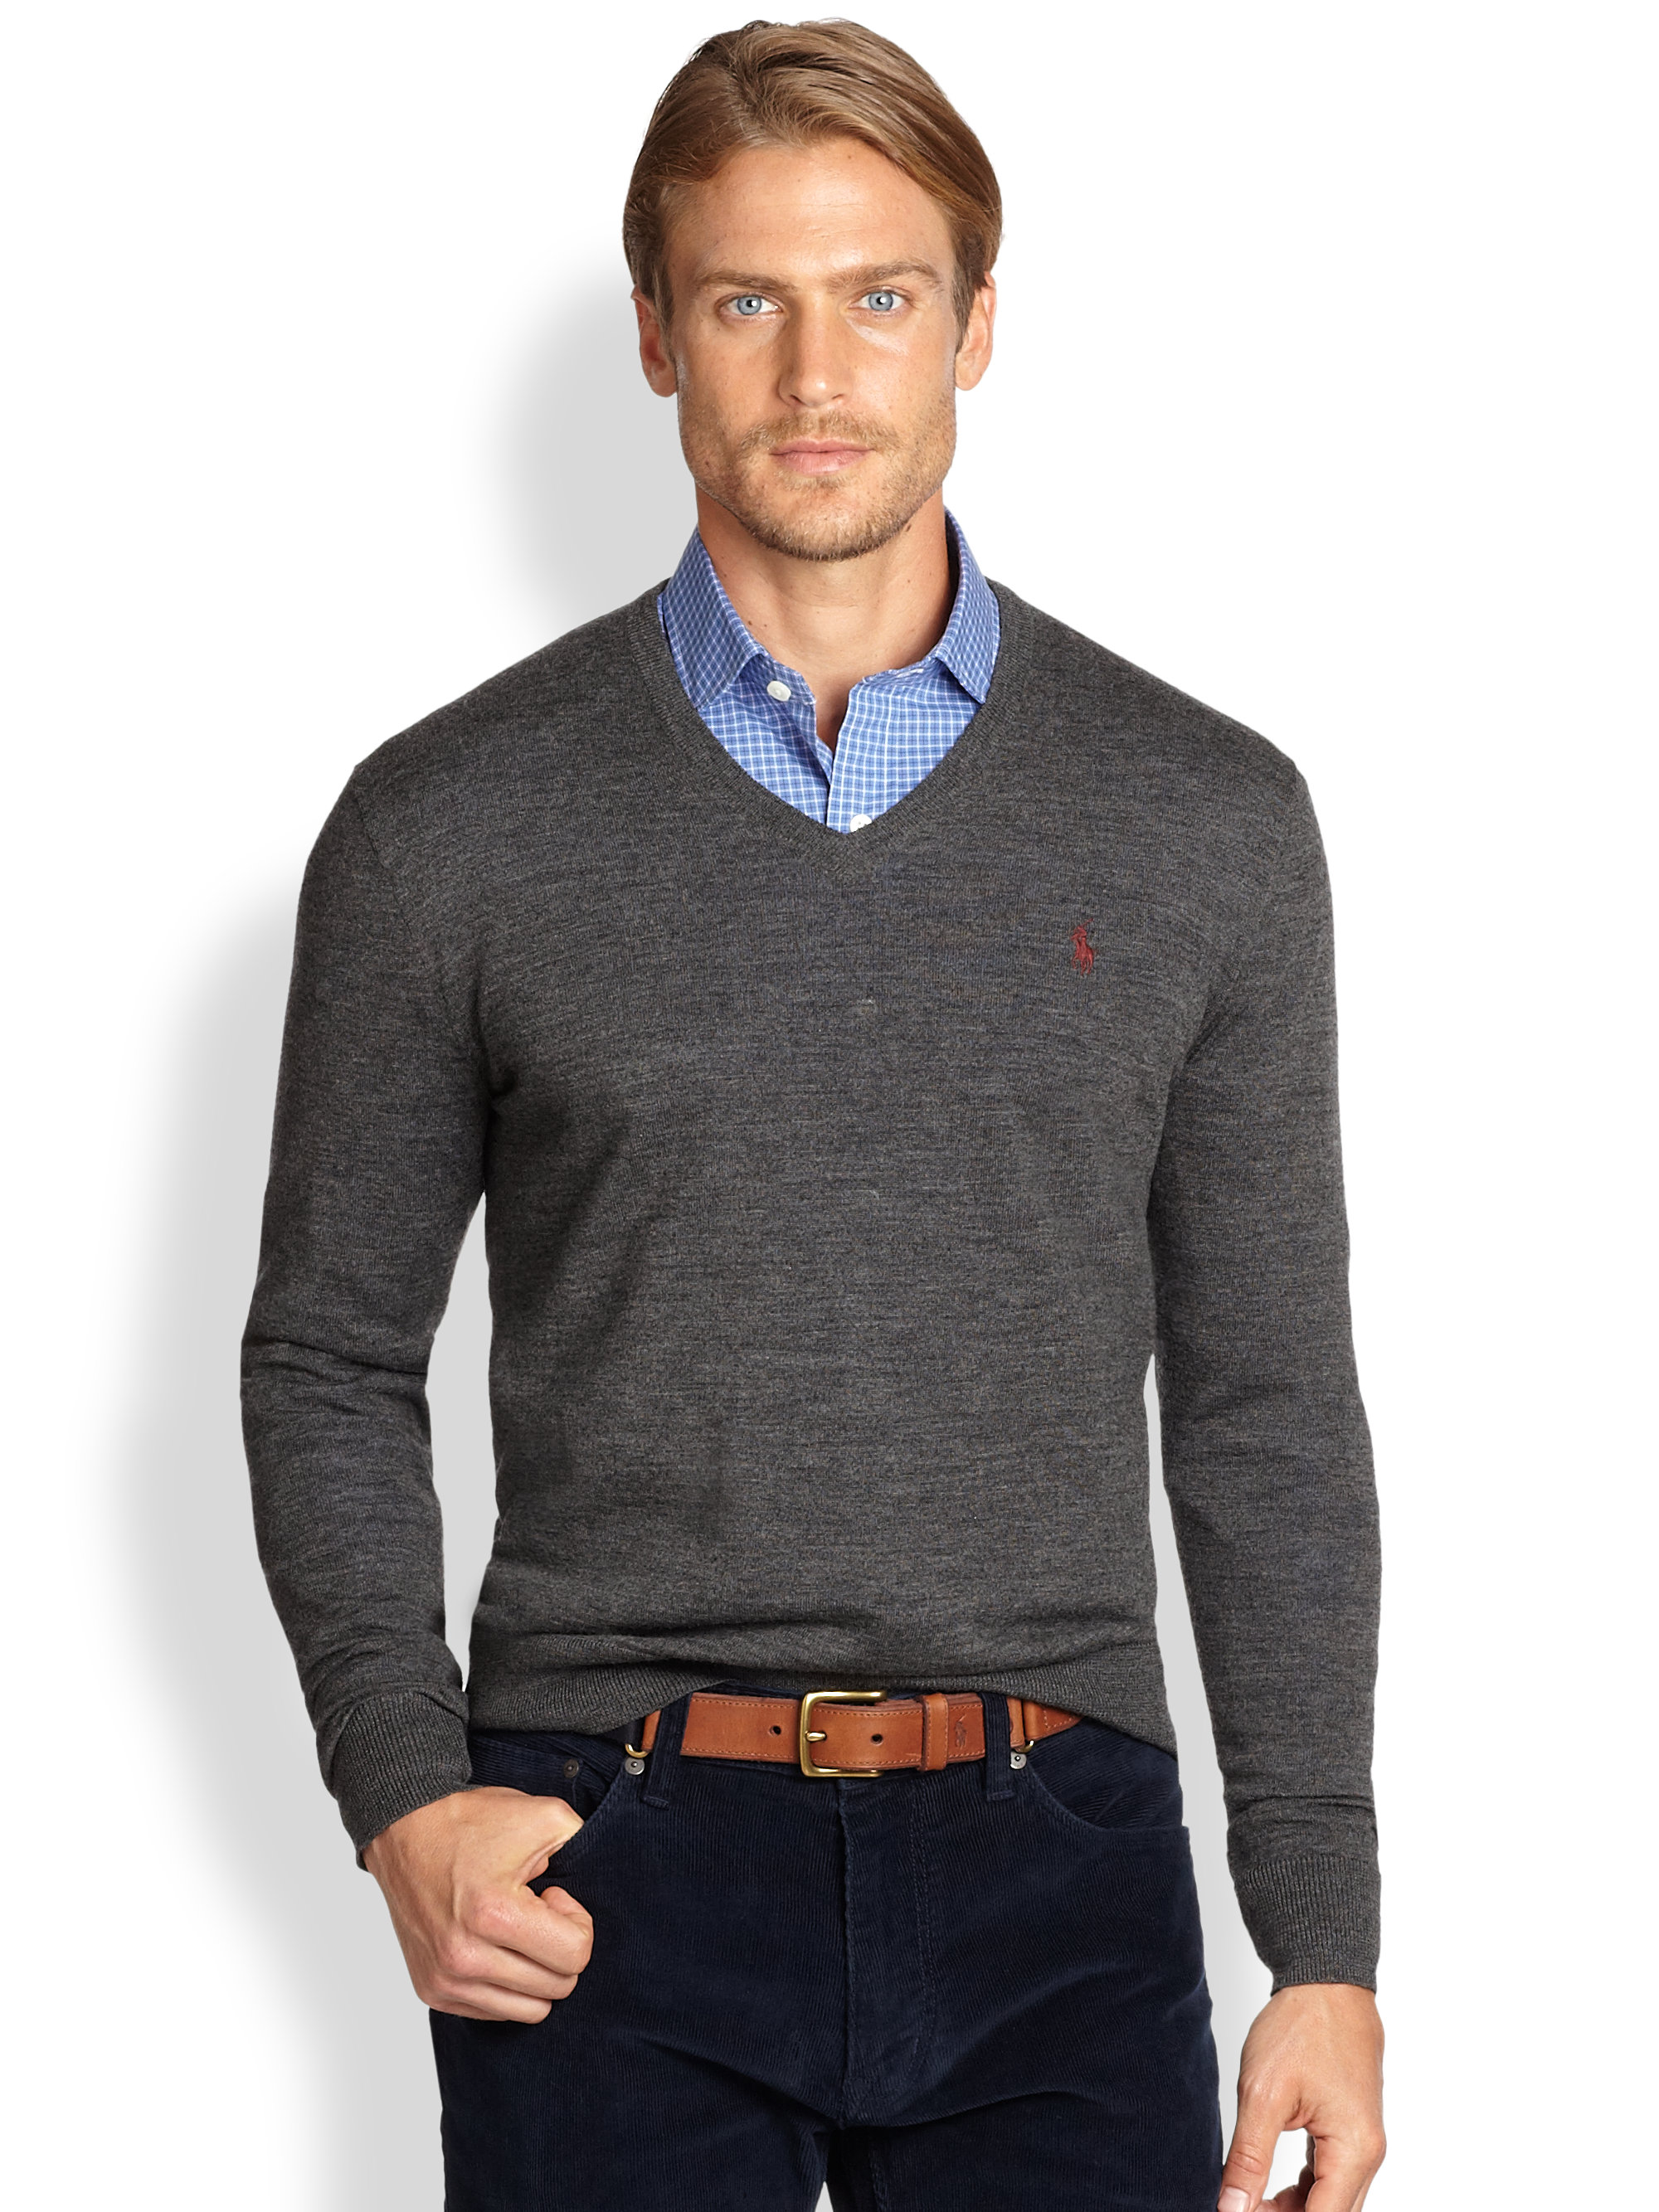 Lyst - Polo Ralph Lauren Merino Wool Vneck Sweater in Gray for Men